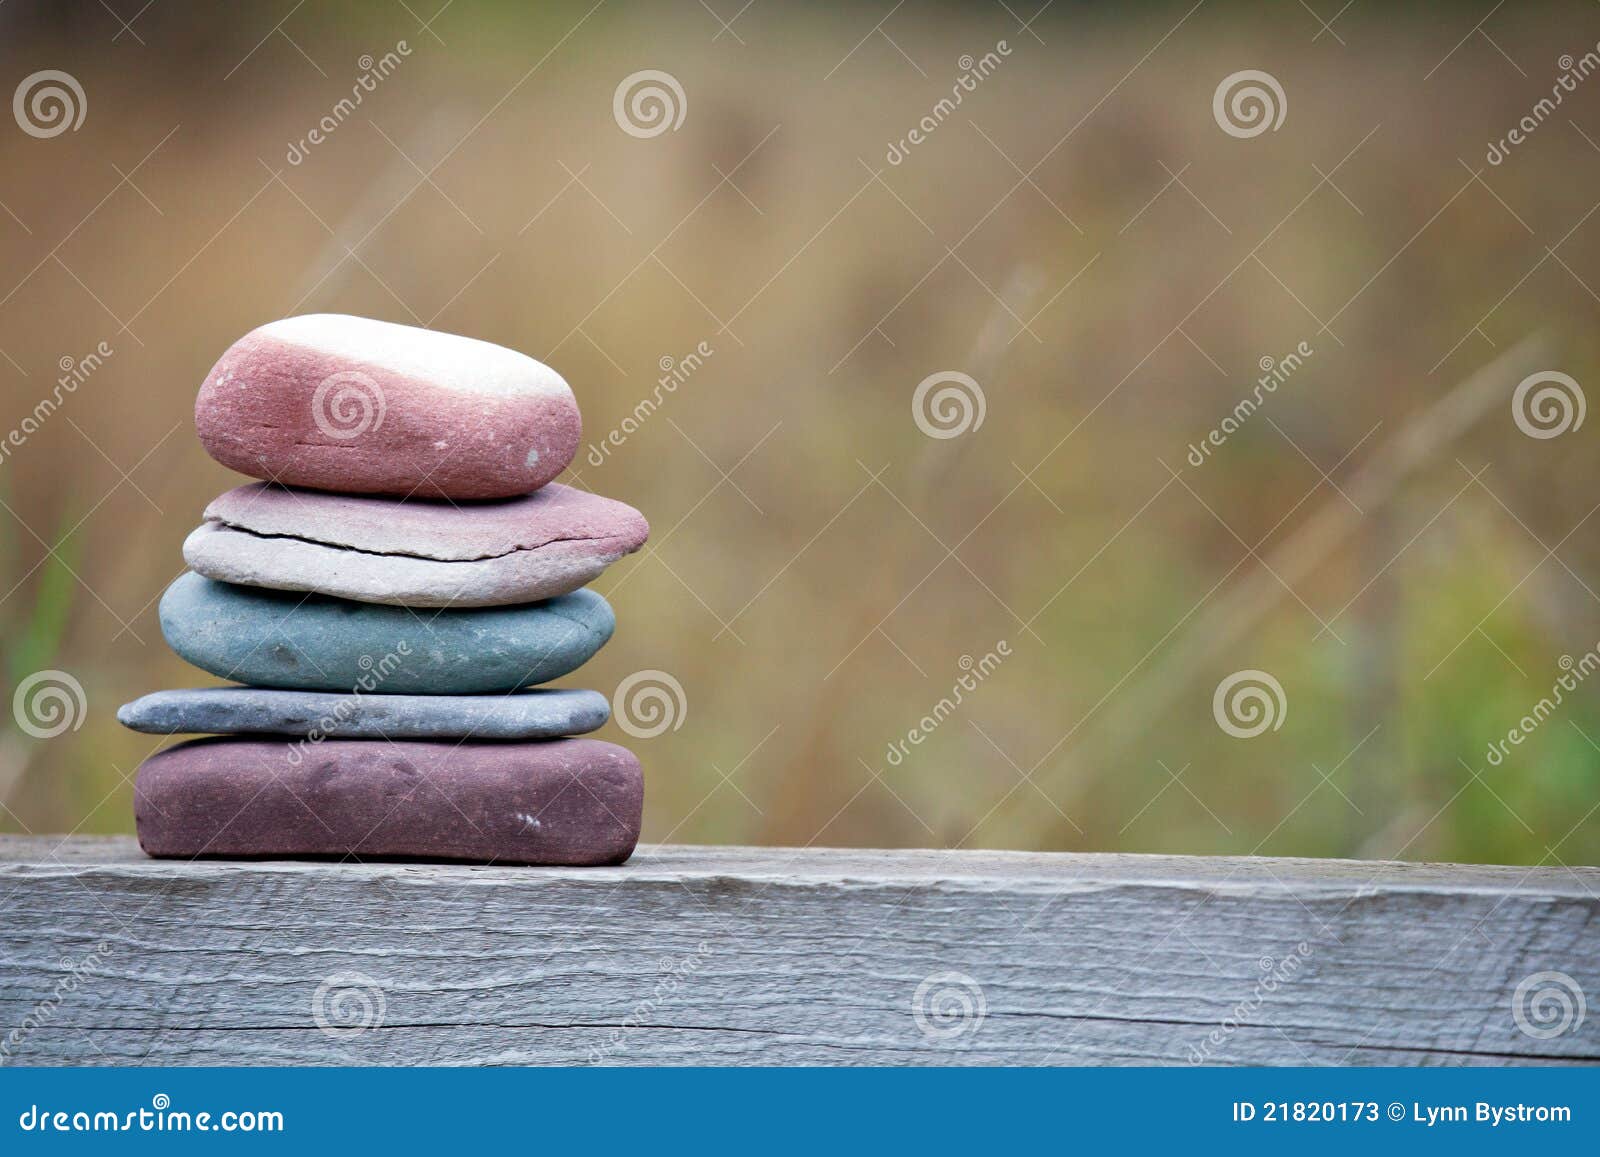 zen-like stack of rocks